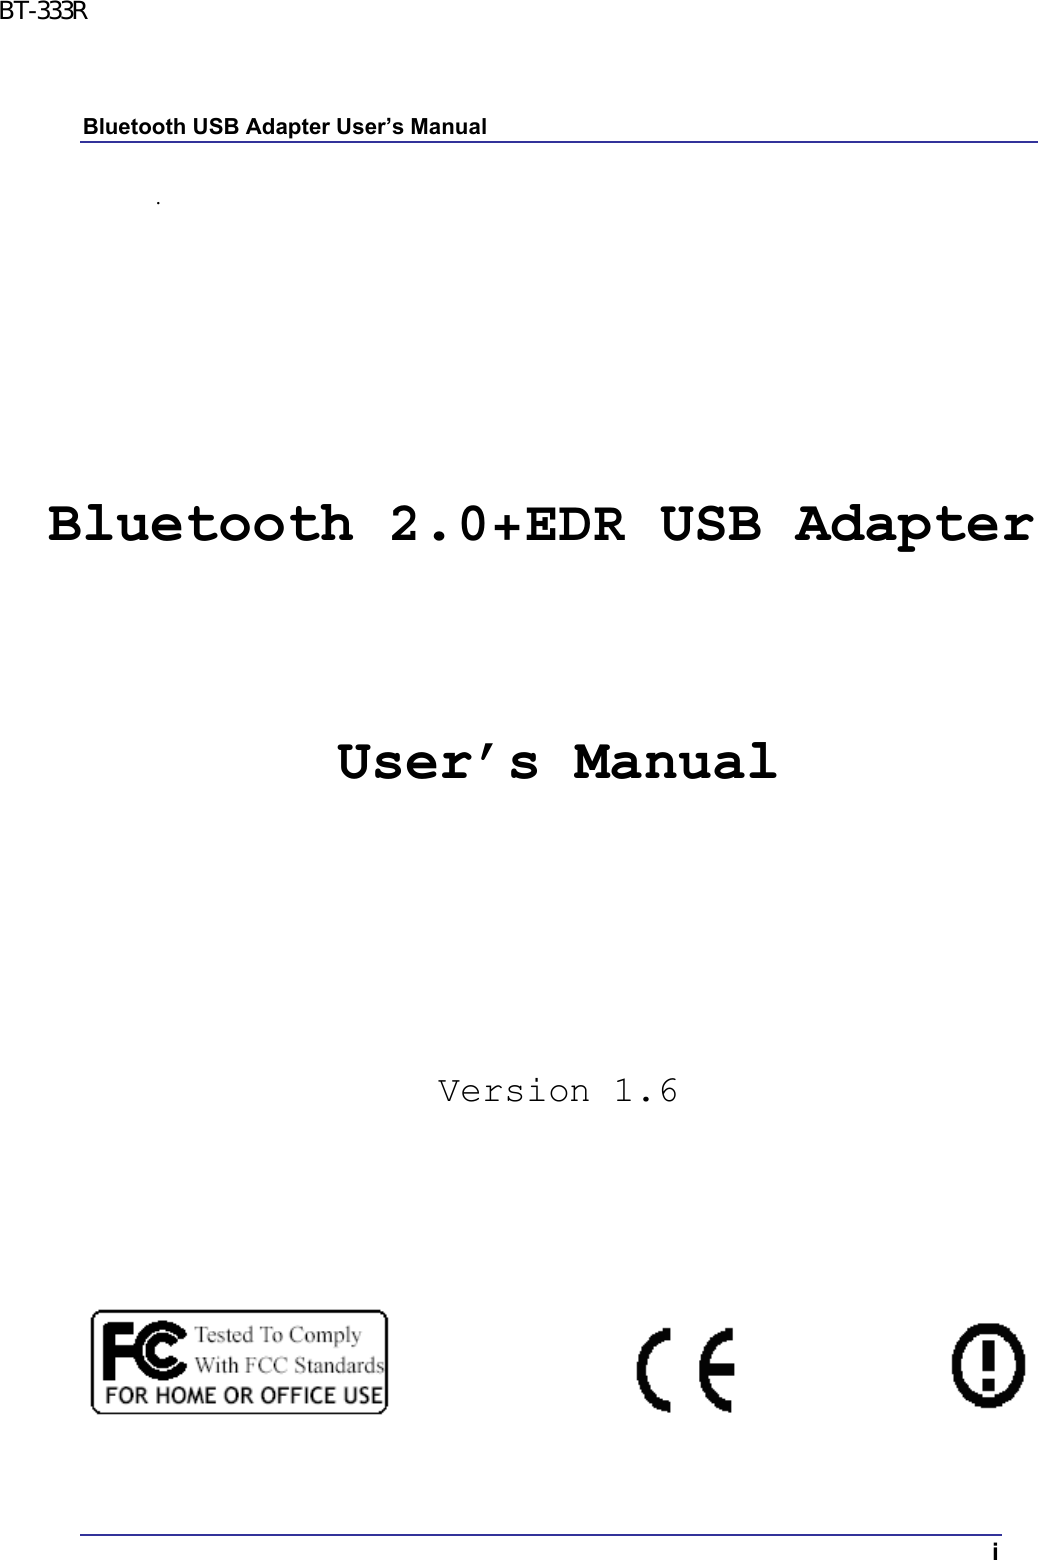 Bluetooth USB Adapter User’s Manual  i .         Bluetooth 2.0+EDR USB Adapter  User’s Manual      Version 1.6       BT-333R